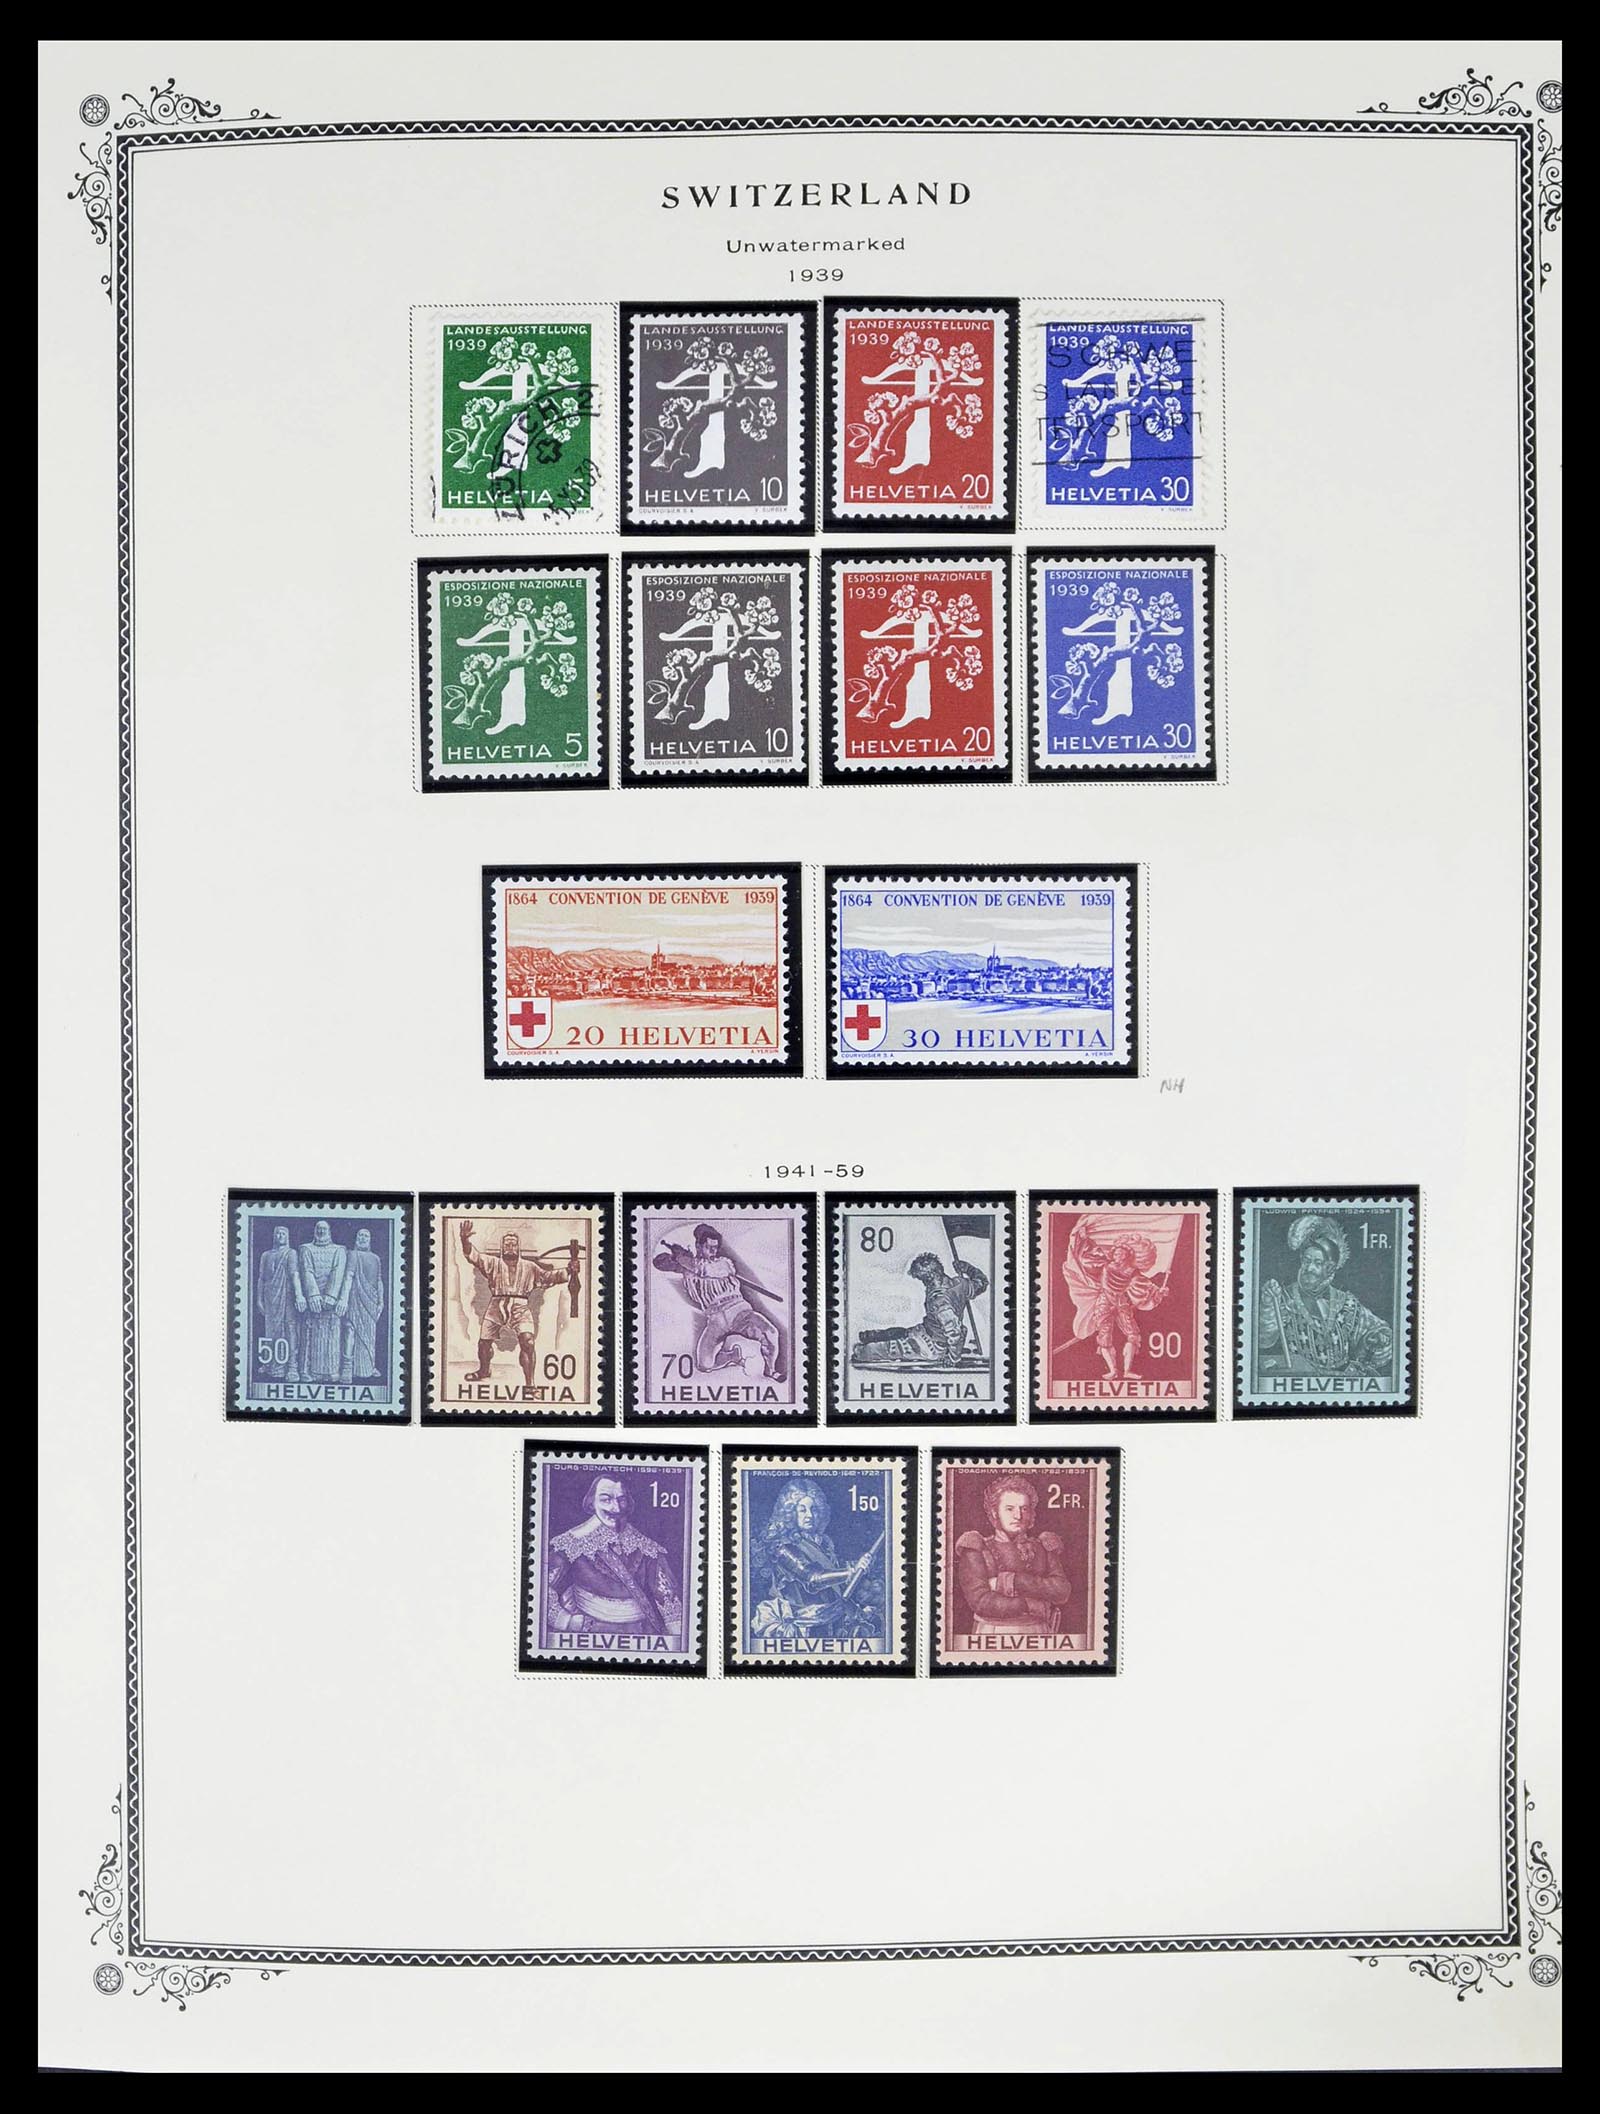 39178 0029 - Stamp collection 39178 Switzerland 1850-1989.